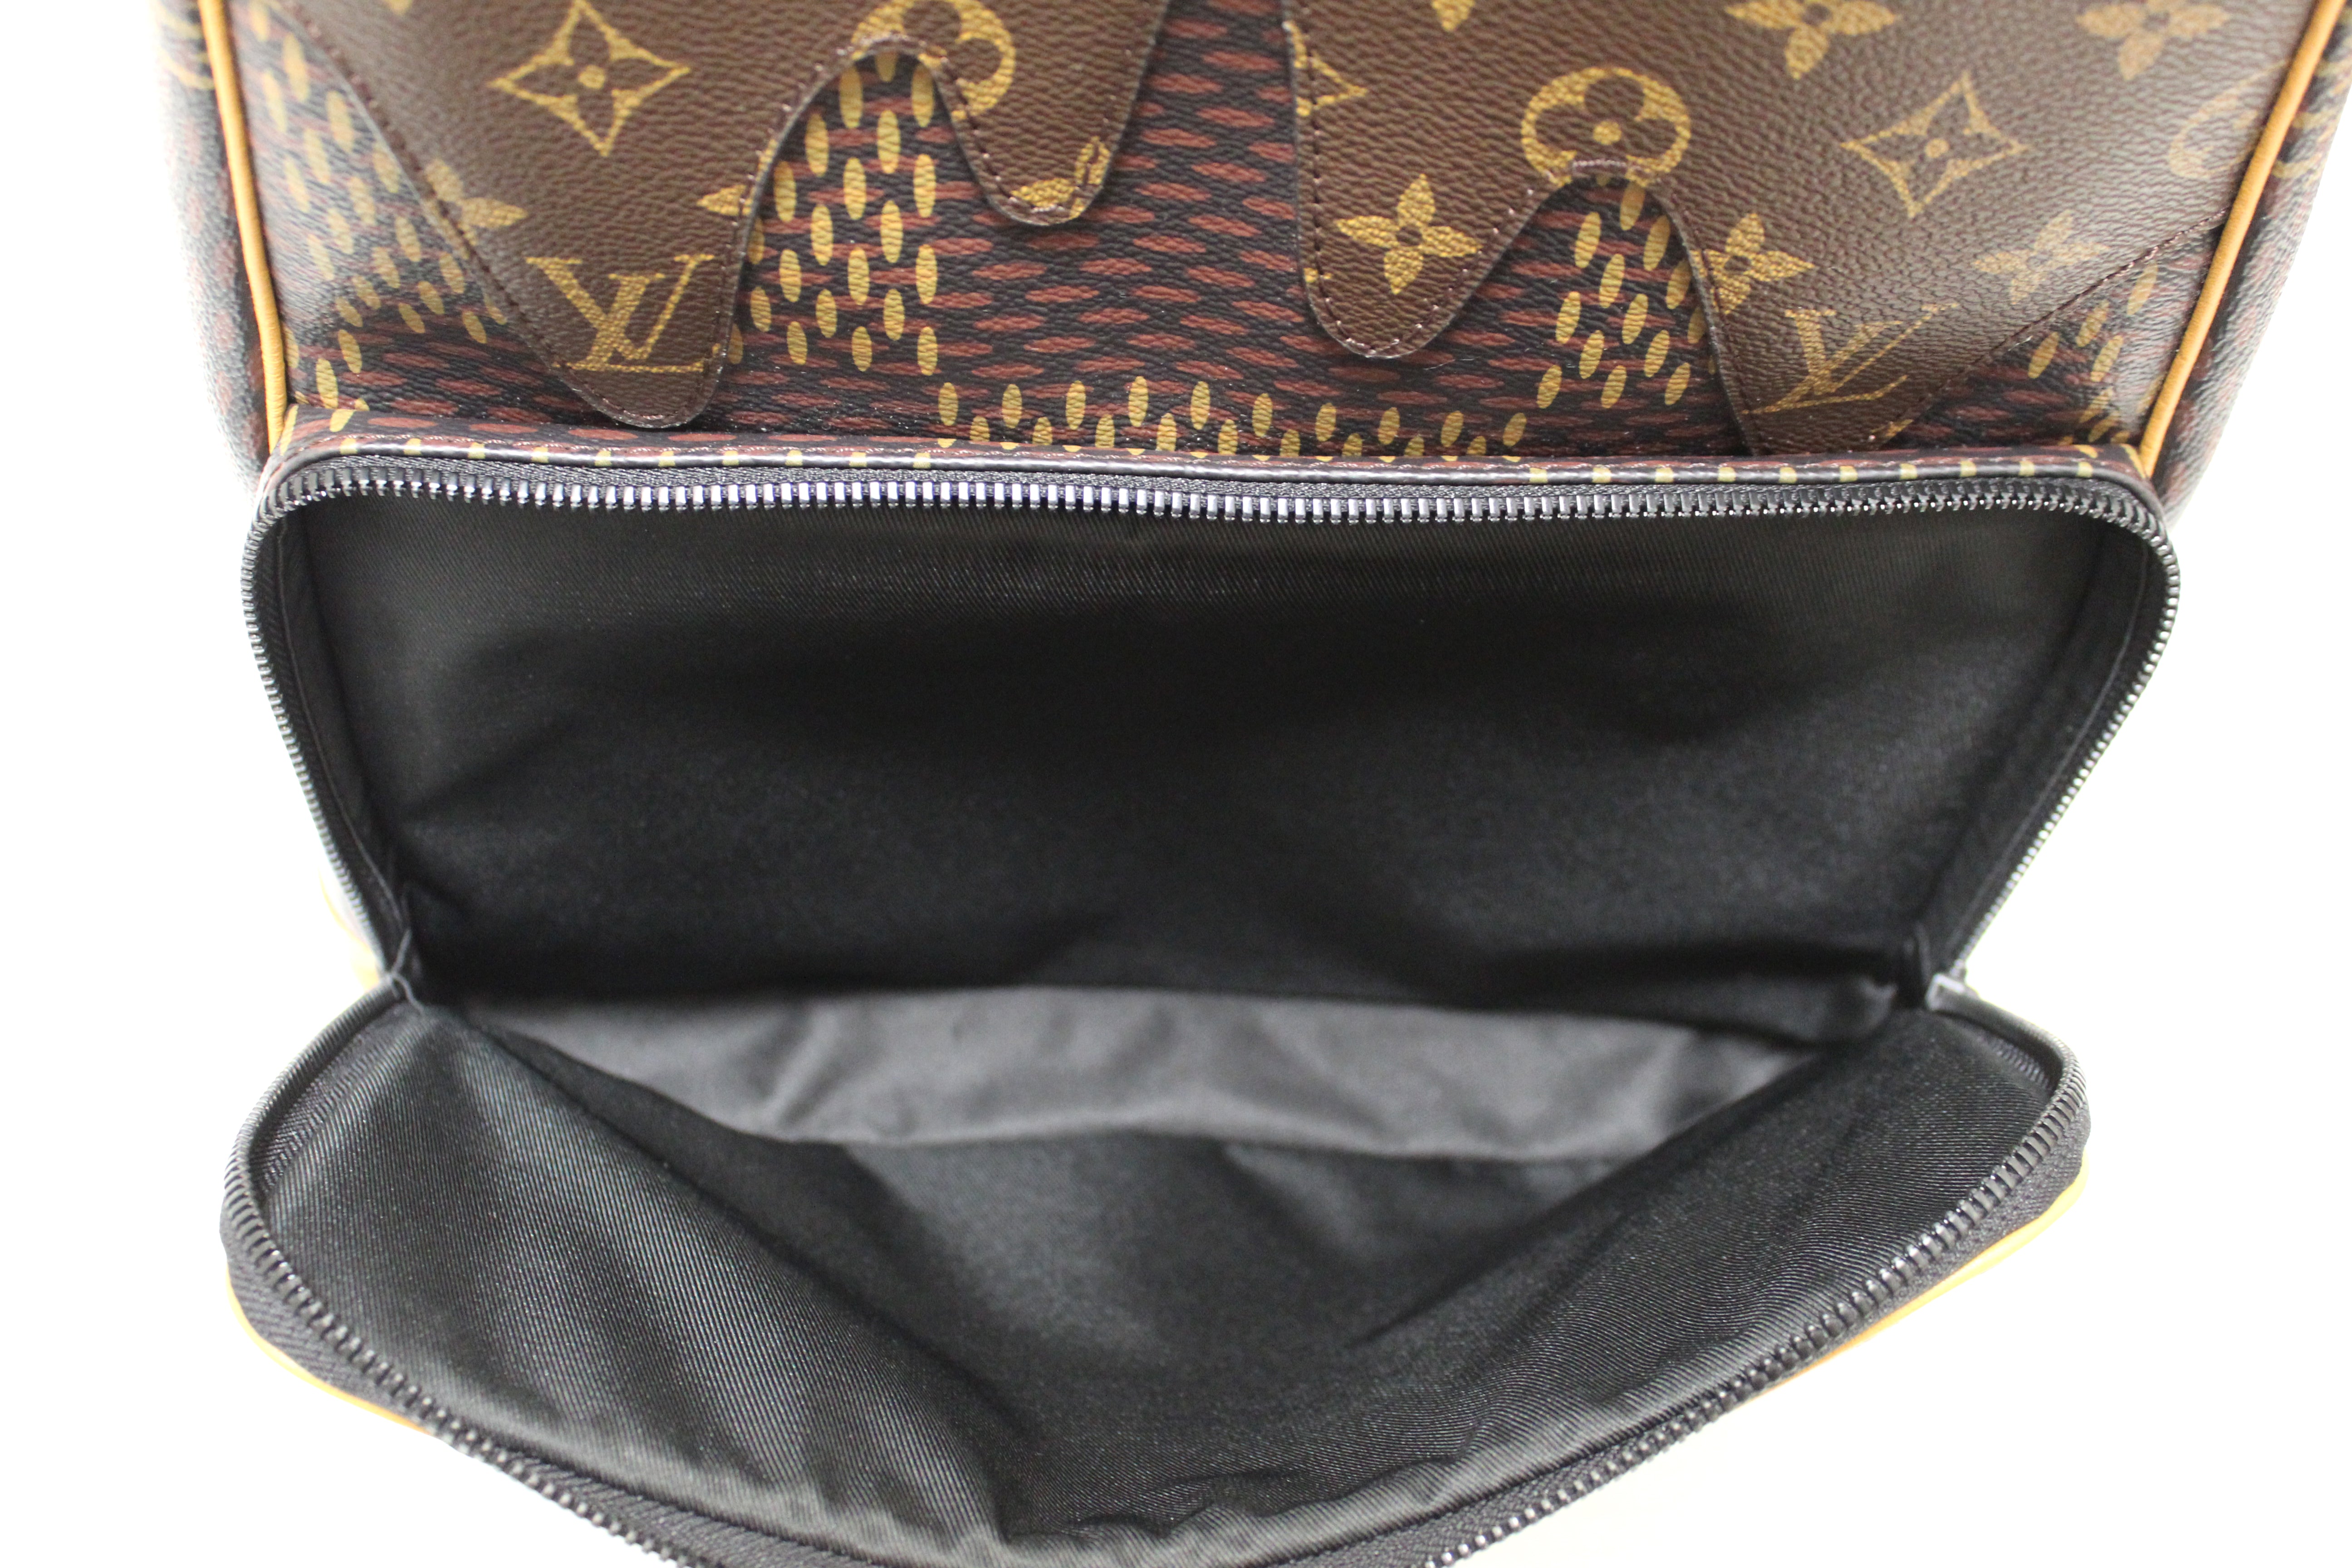 Authentic Louis Vuitton Nigo Capsule Special Edition Campus Backpack